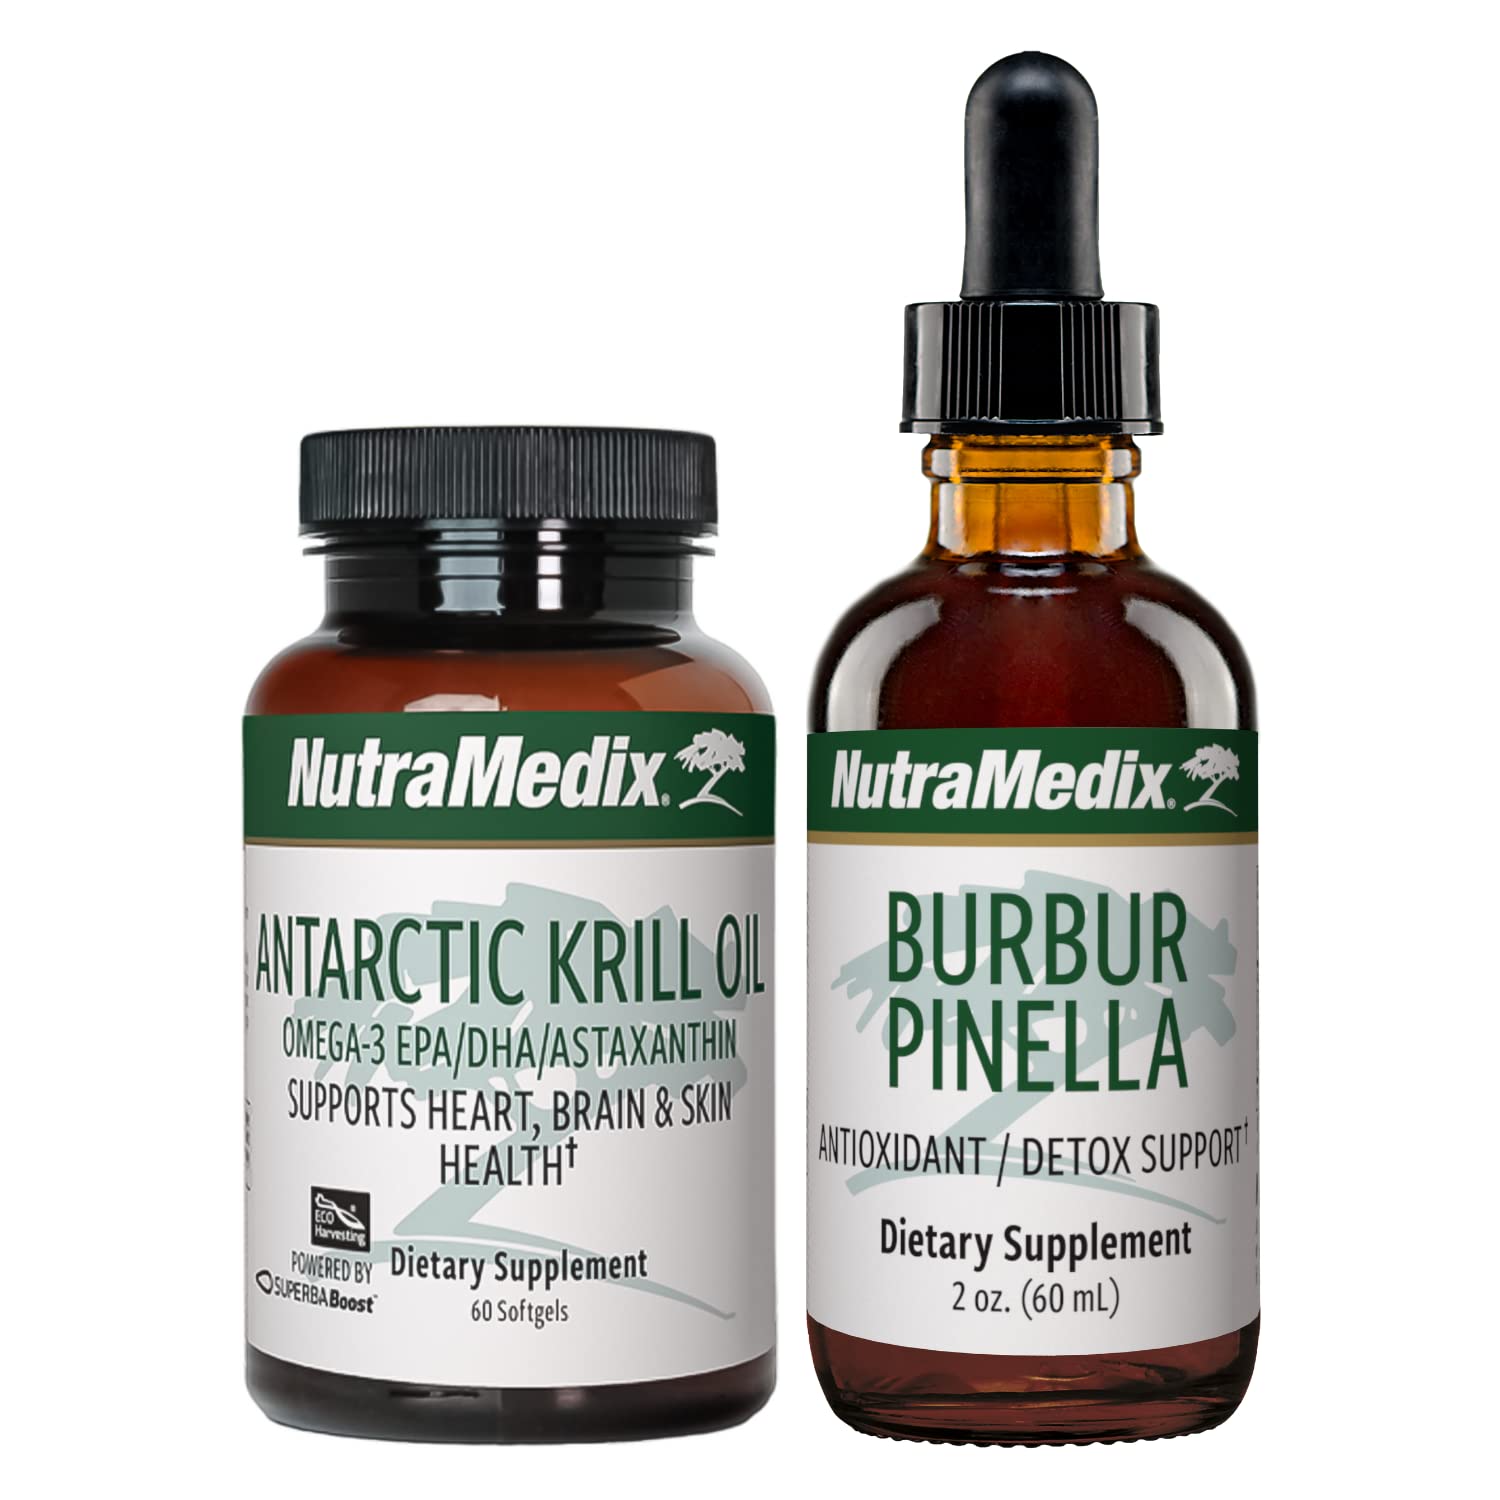 NutraMedix Brain Support Bundle - Includes Artic Krill Oil Softgels an